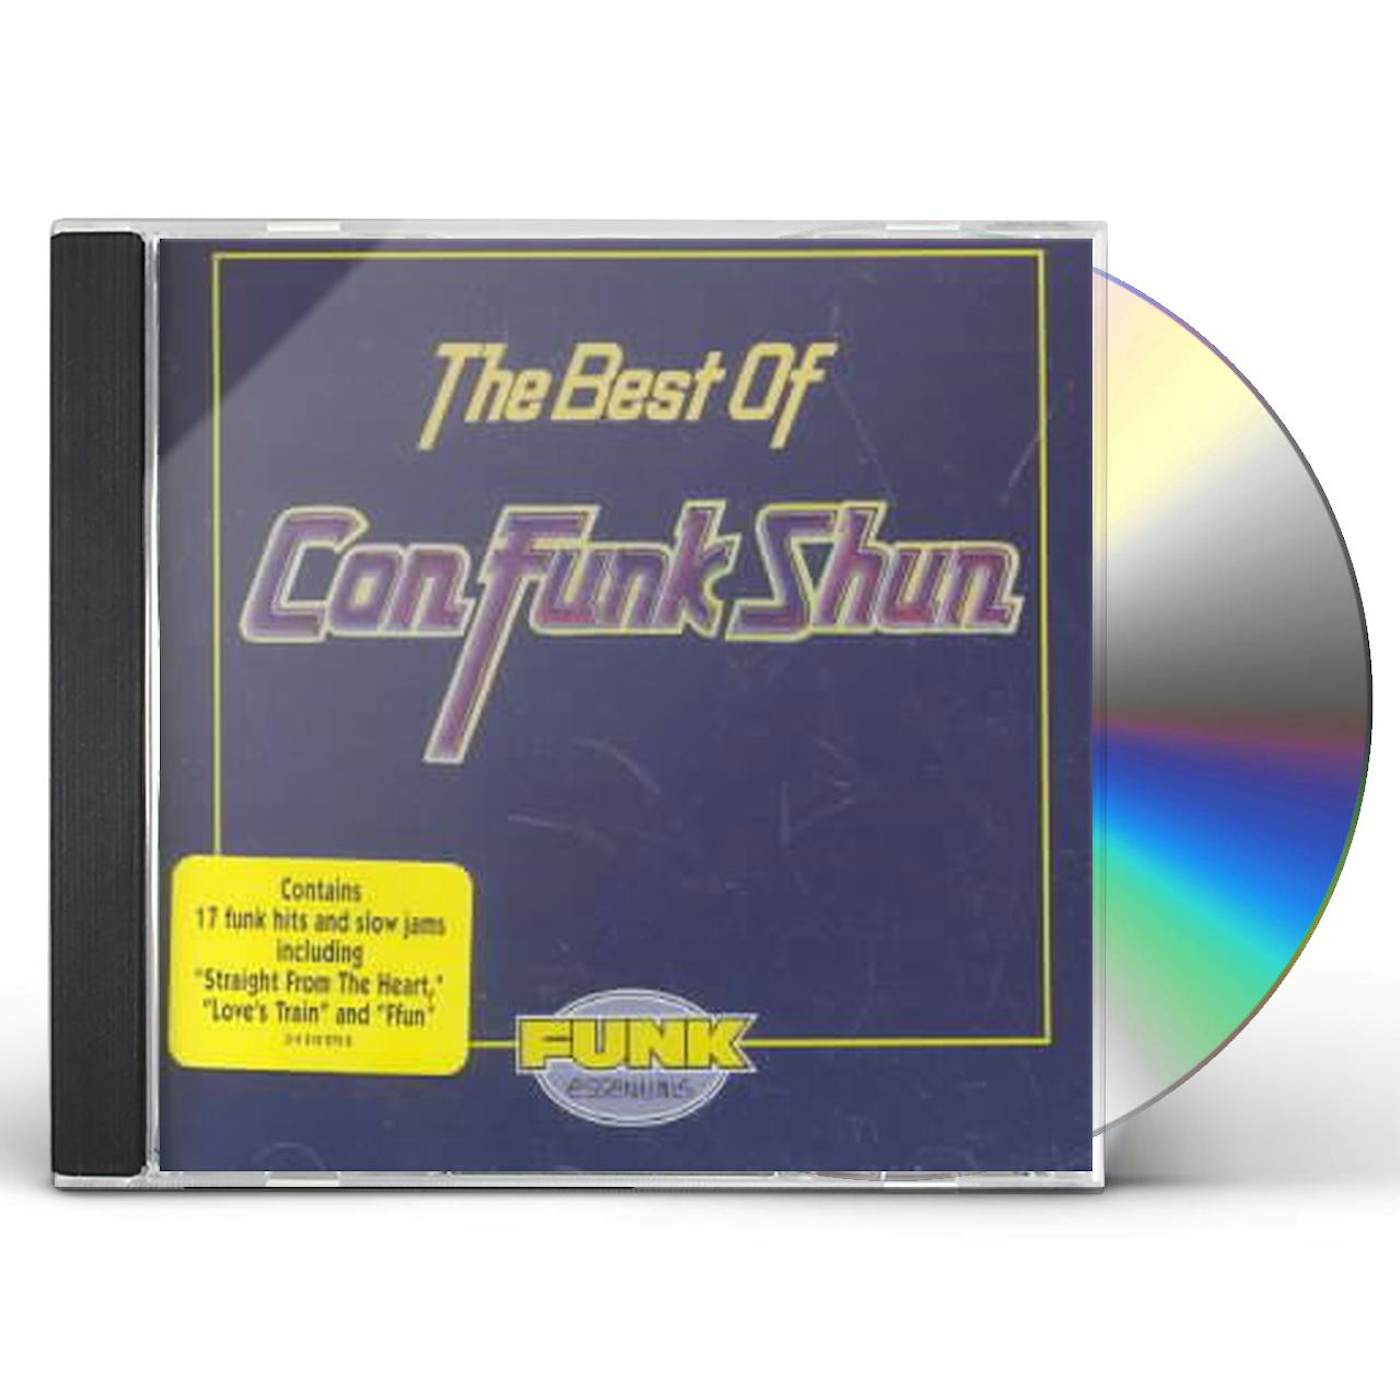 Con Funk Shun BEST OF 1 CD